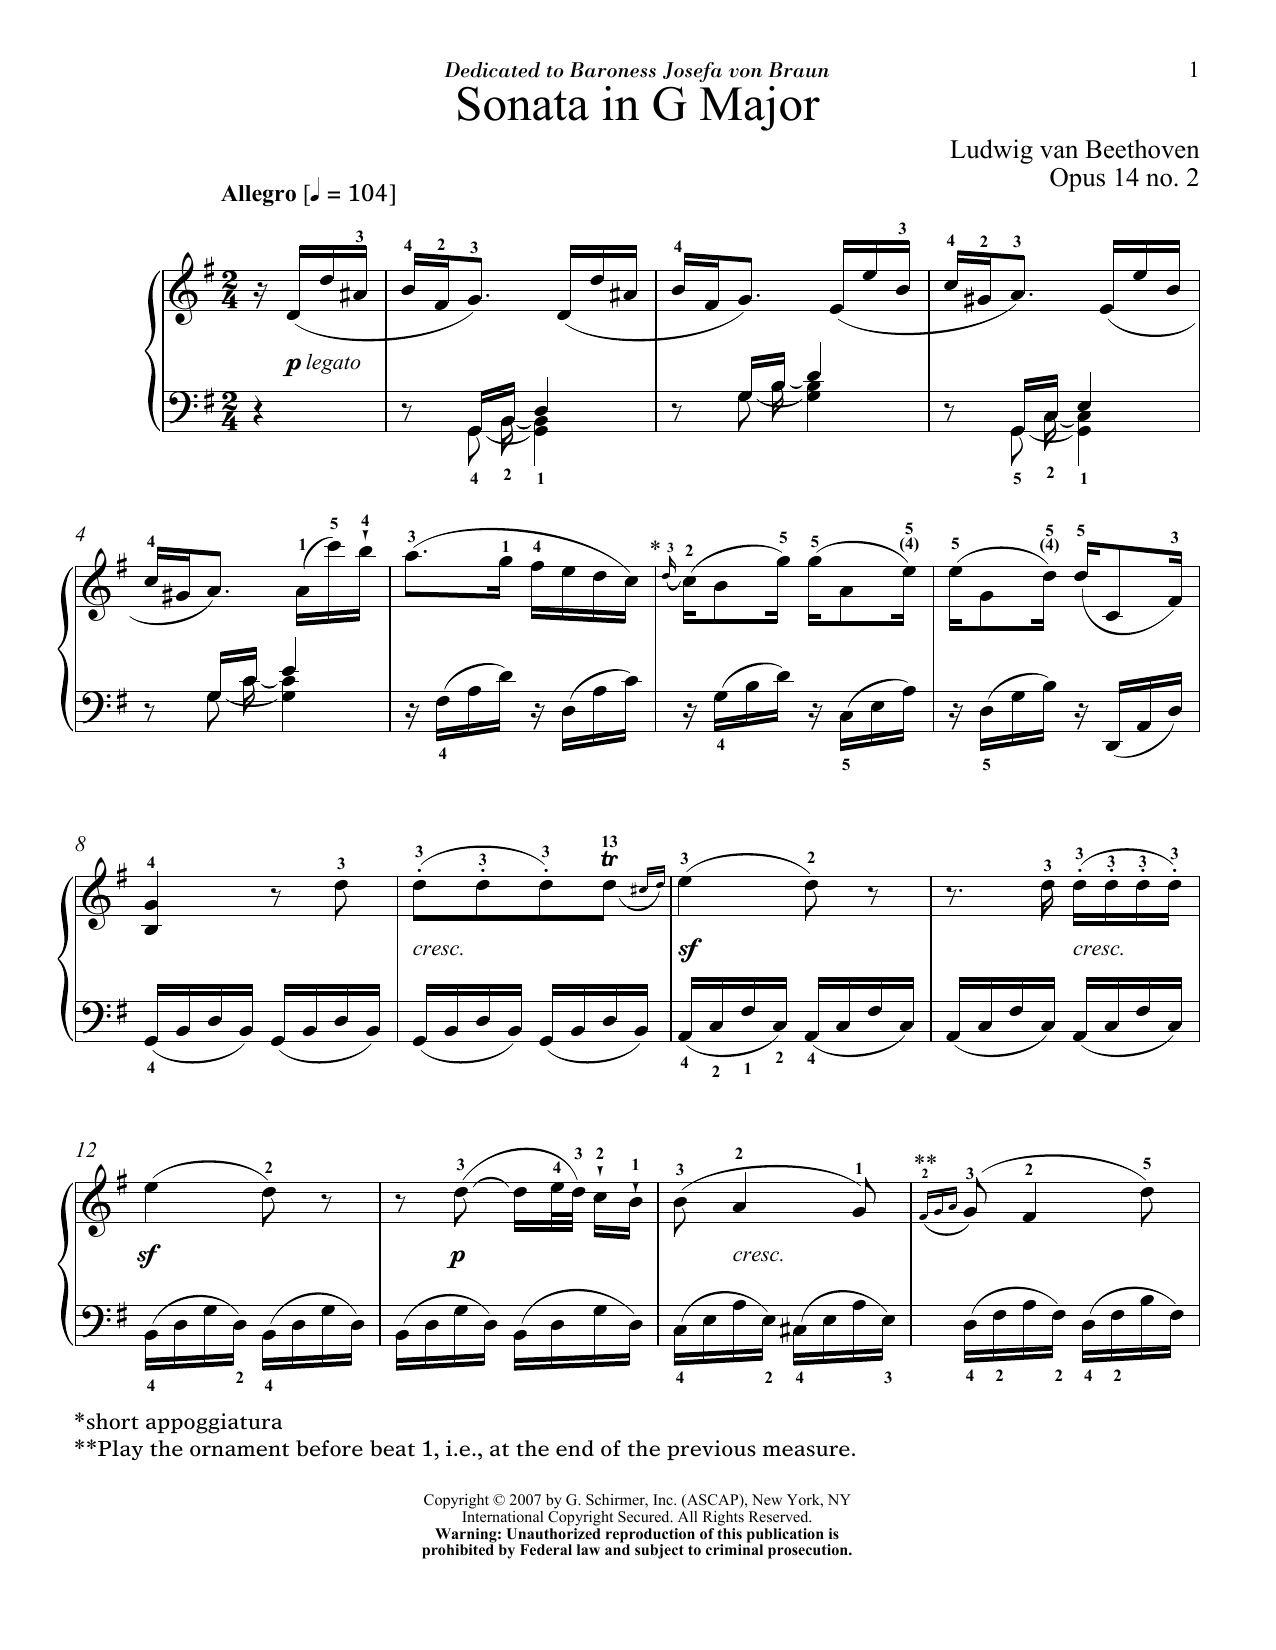 Ludwig van Beethoven Sonata In G Major, Op. 14, No. 2 Sheet Music Notes & Chords for Piano - Download or Print PDF